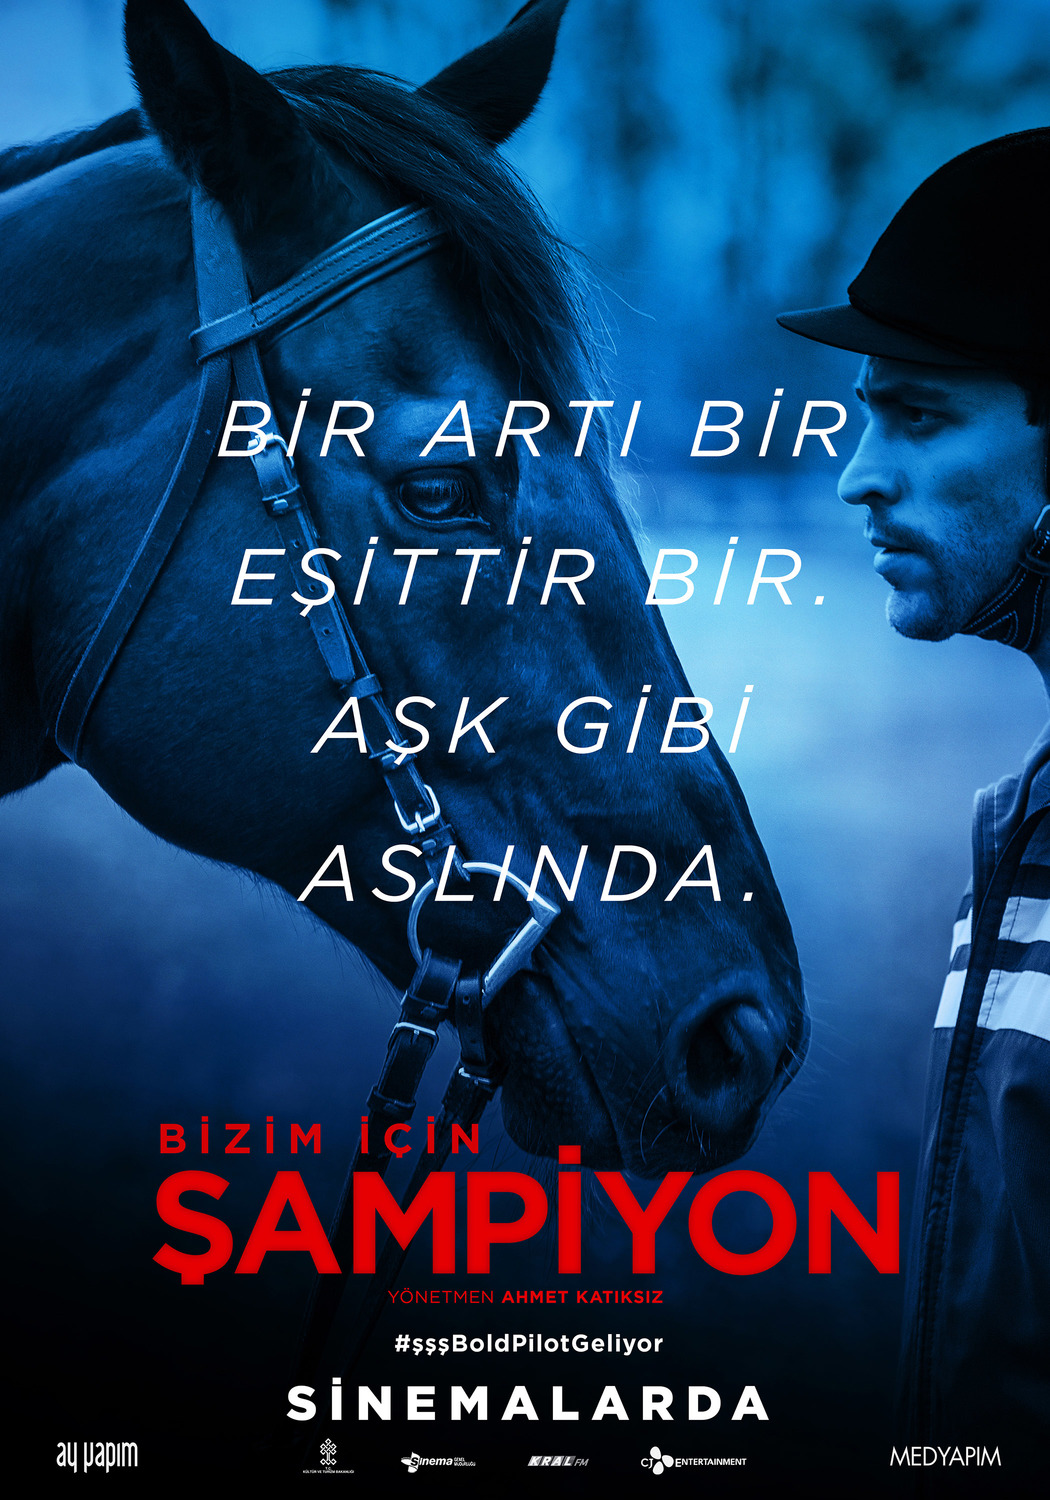 Extra Large Movie Poster Image for Bizim İçin Şampiyon (#5 of 8)